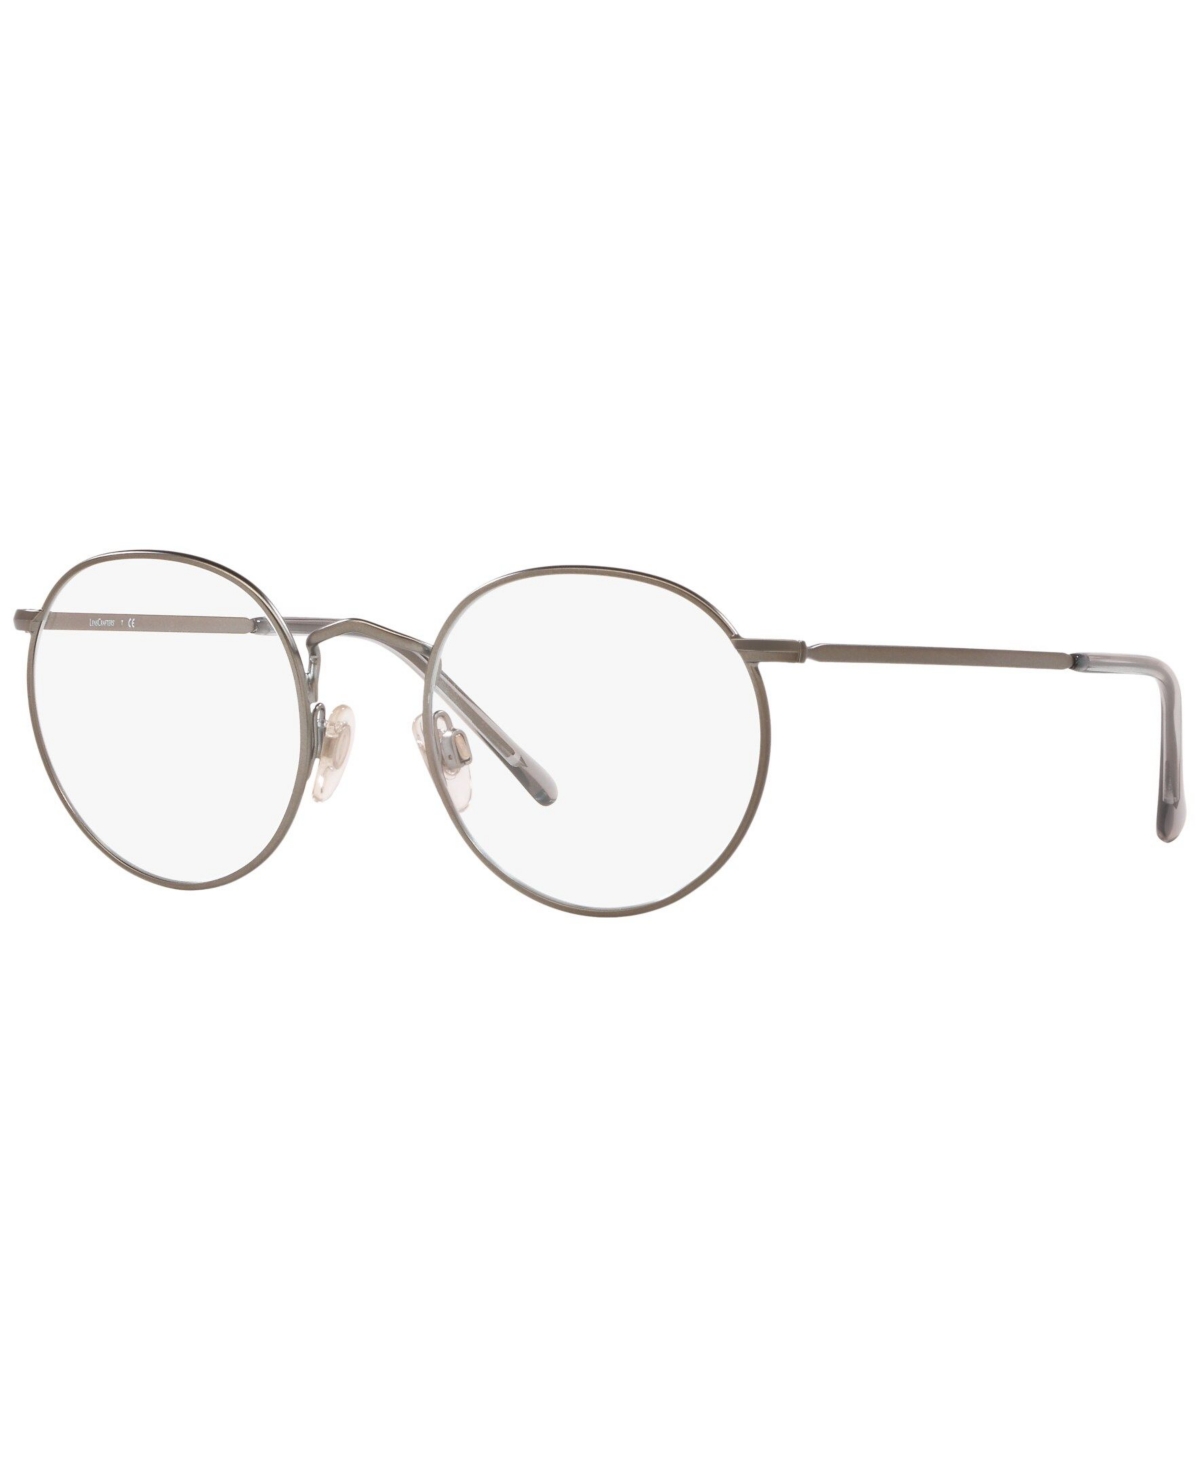 EC1001 Men's Panthos Eyeglasses - Gray